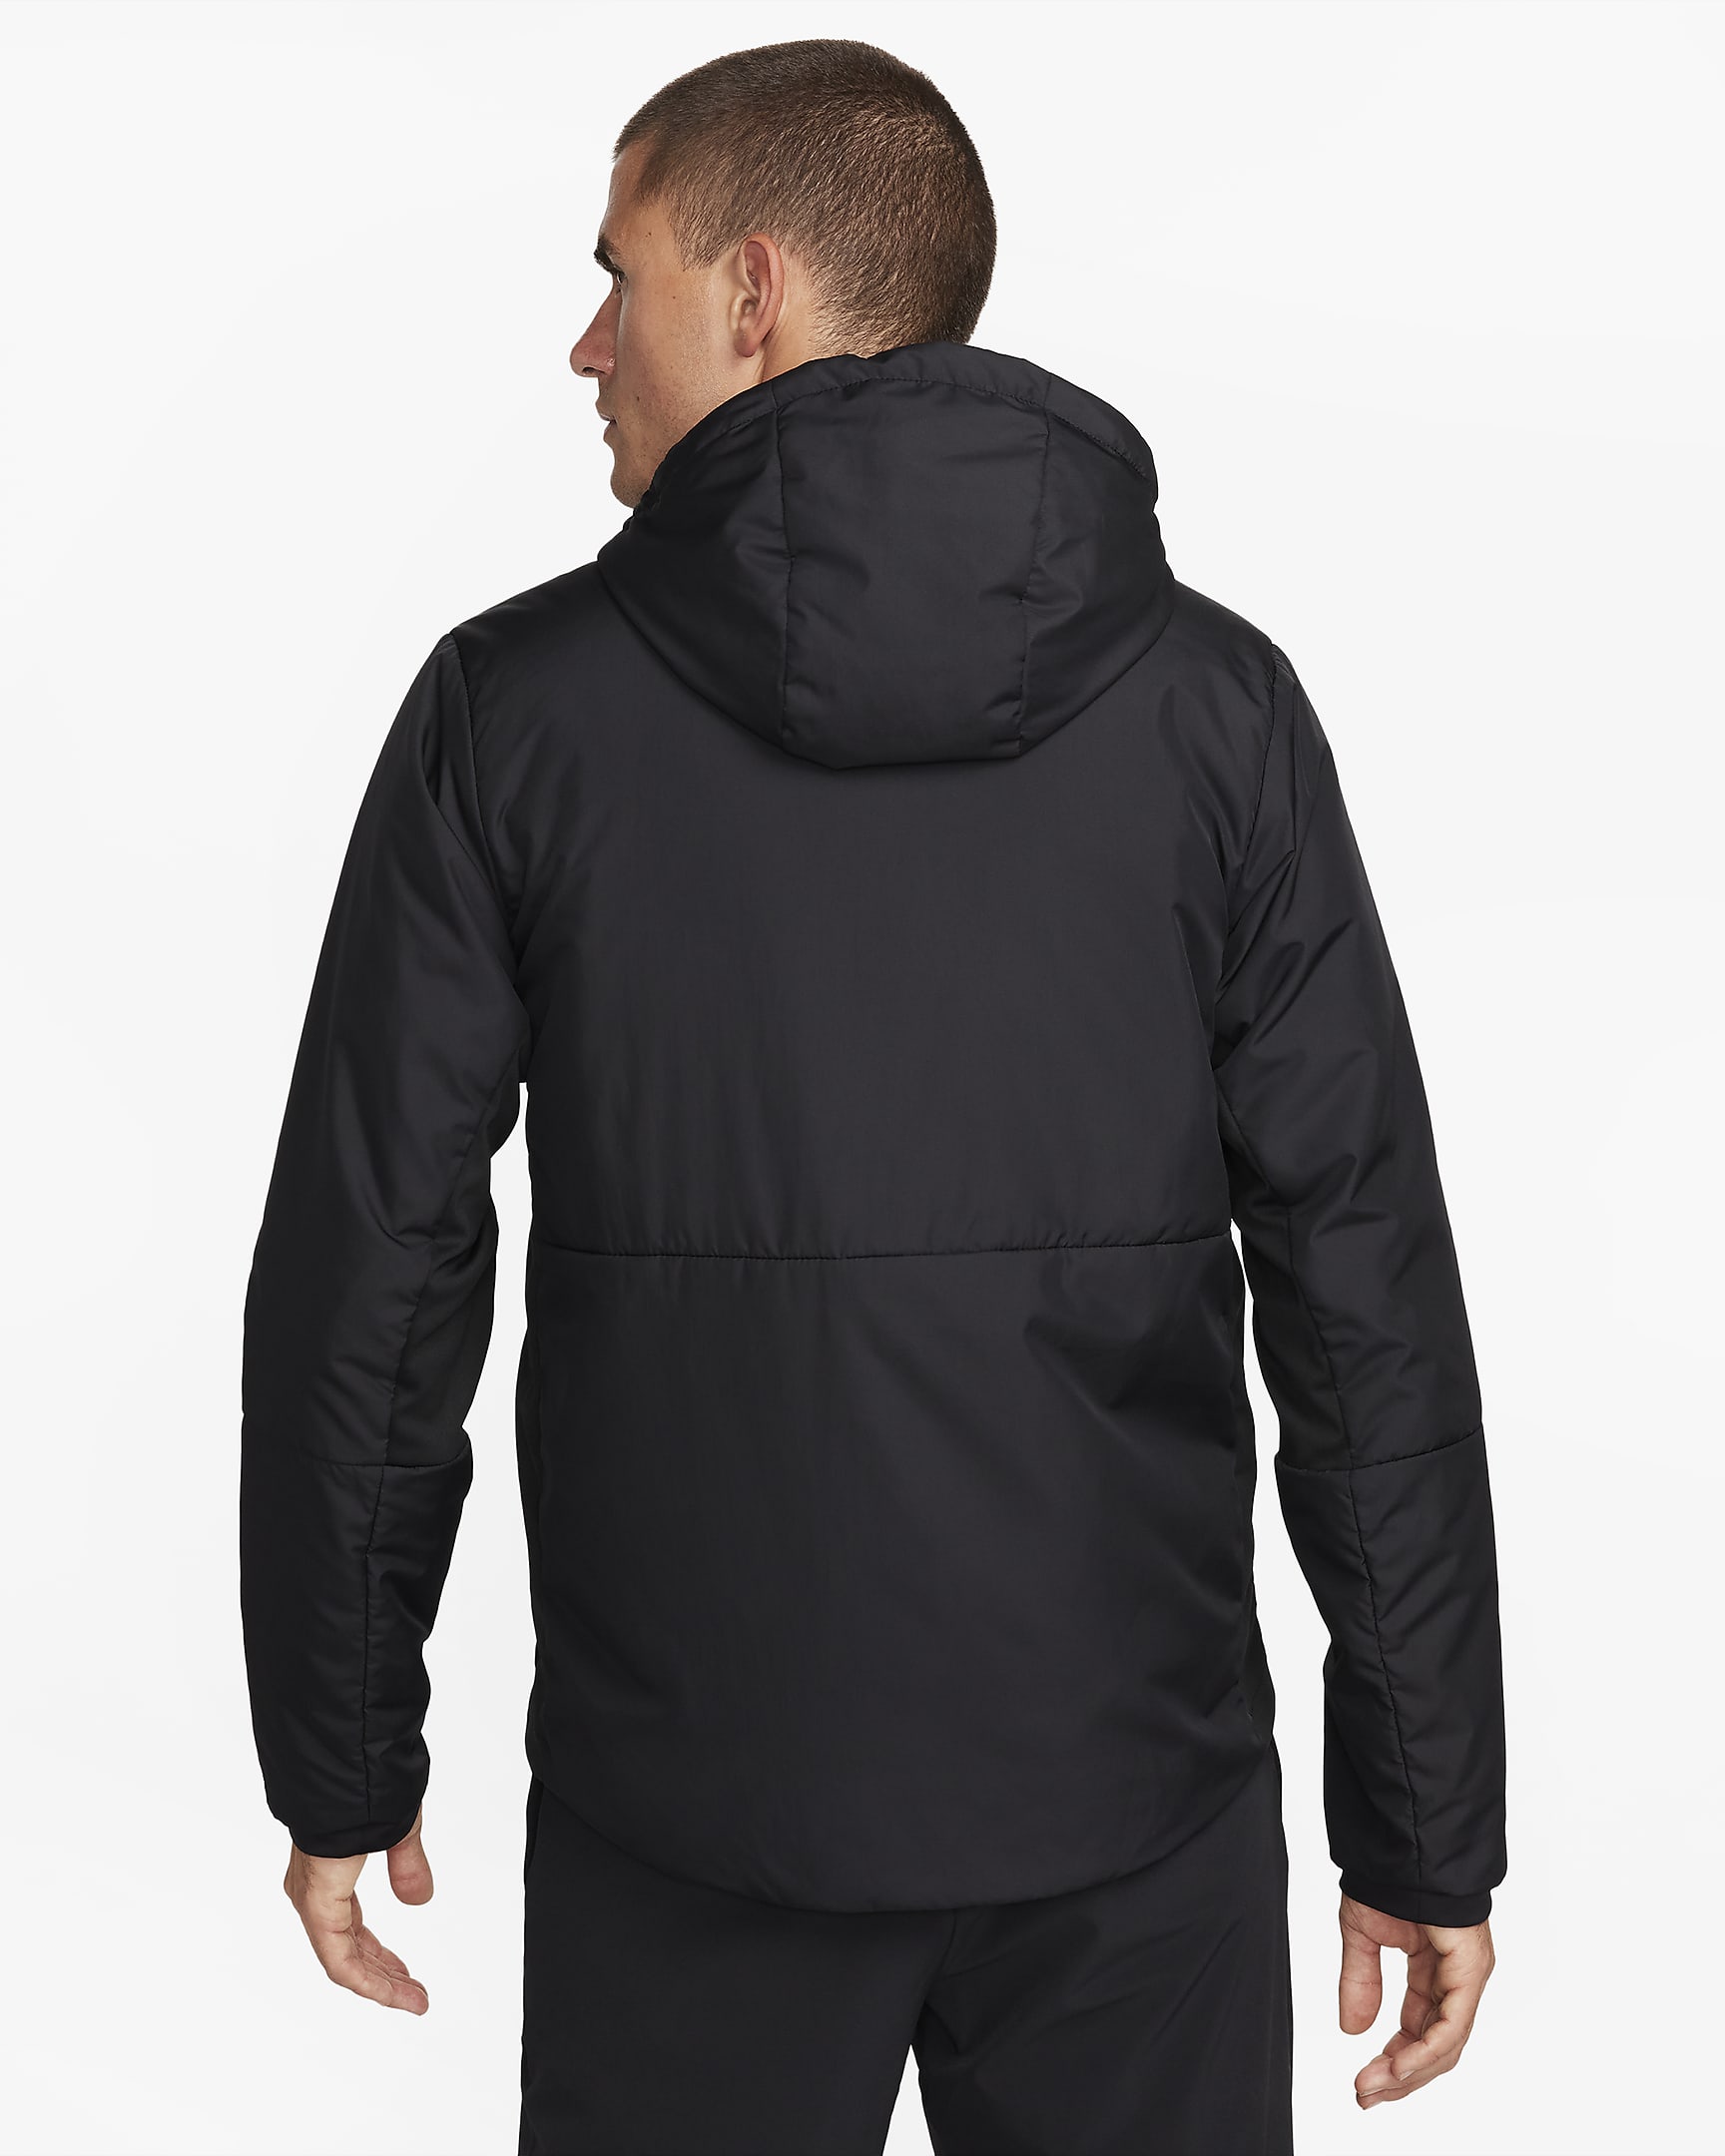 Nike Unlimited Men's Therma-FIT Versatile Jacket - Black/Black